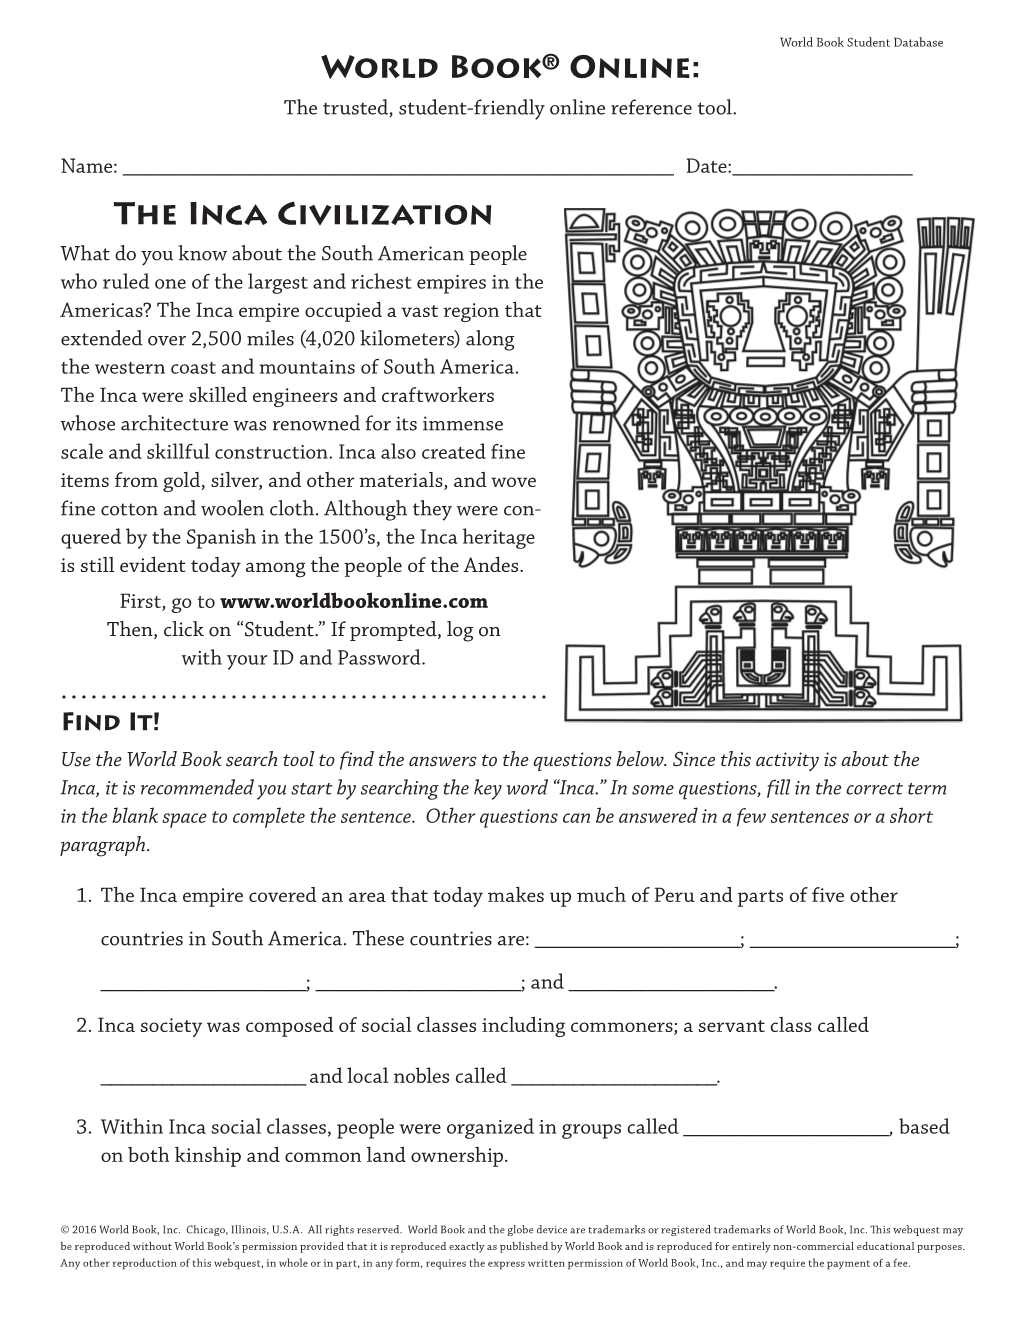 World Book® Online: the Inca Civilization